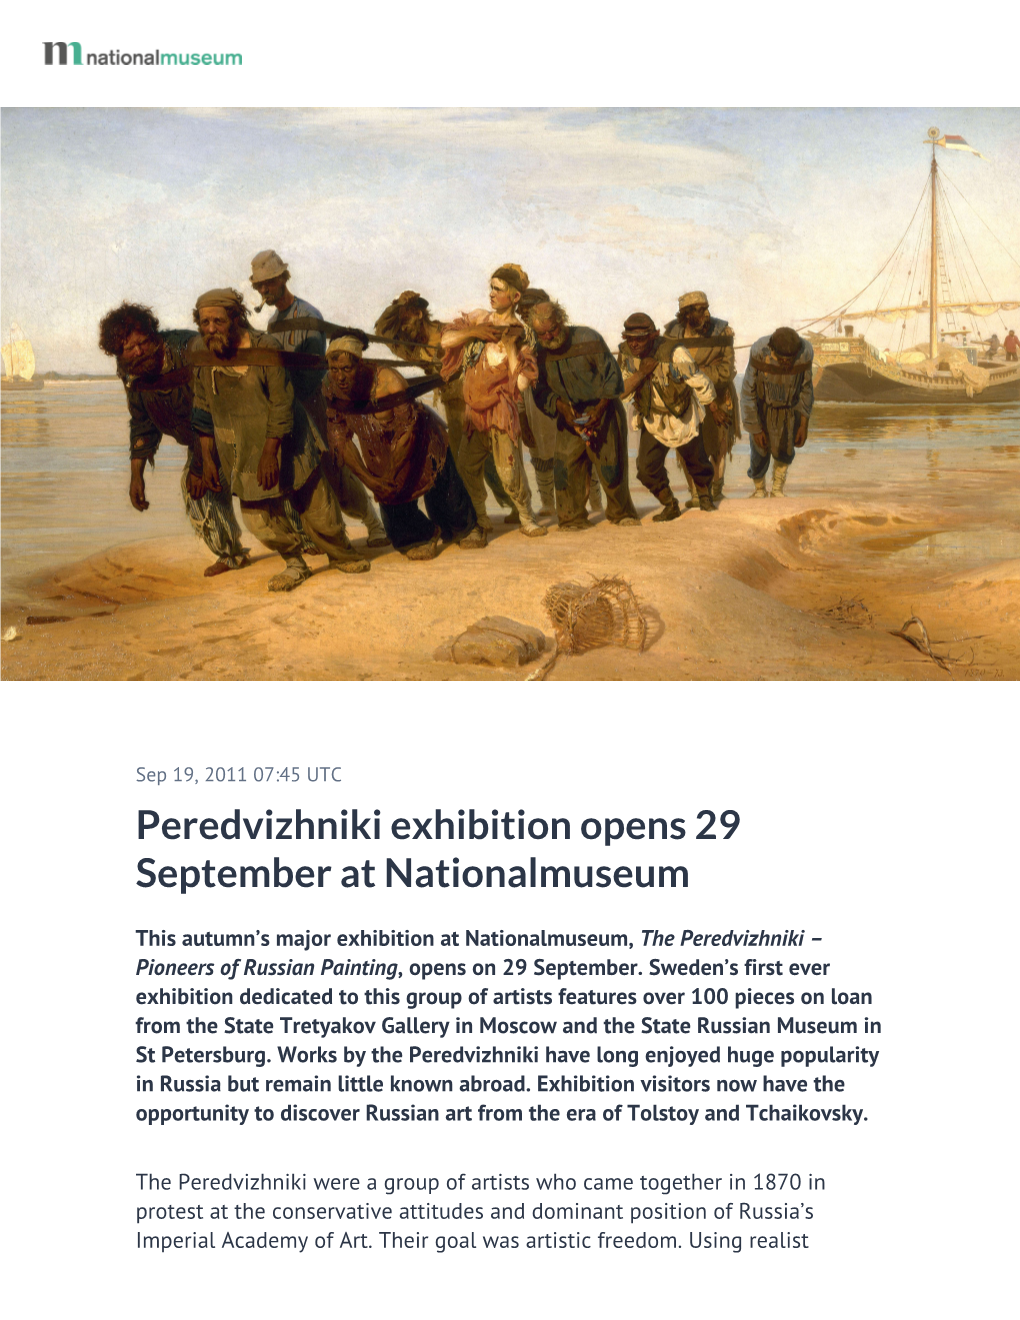 Peredvizhniki Exhibition Opens 29 September at Nationalmuseum